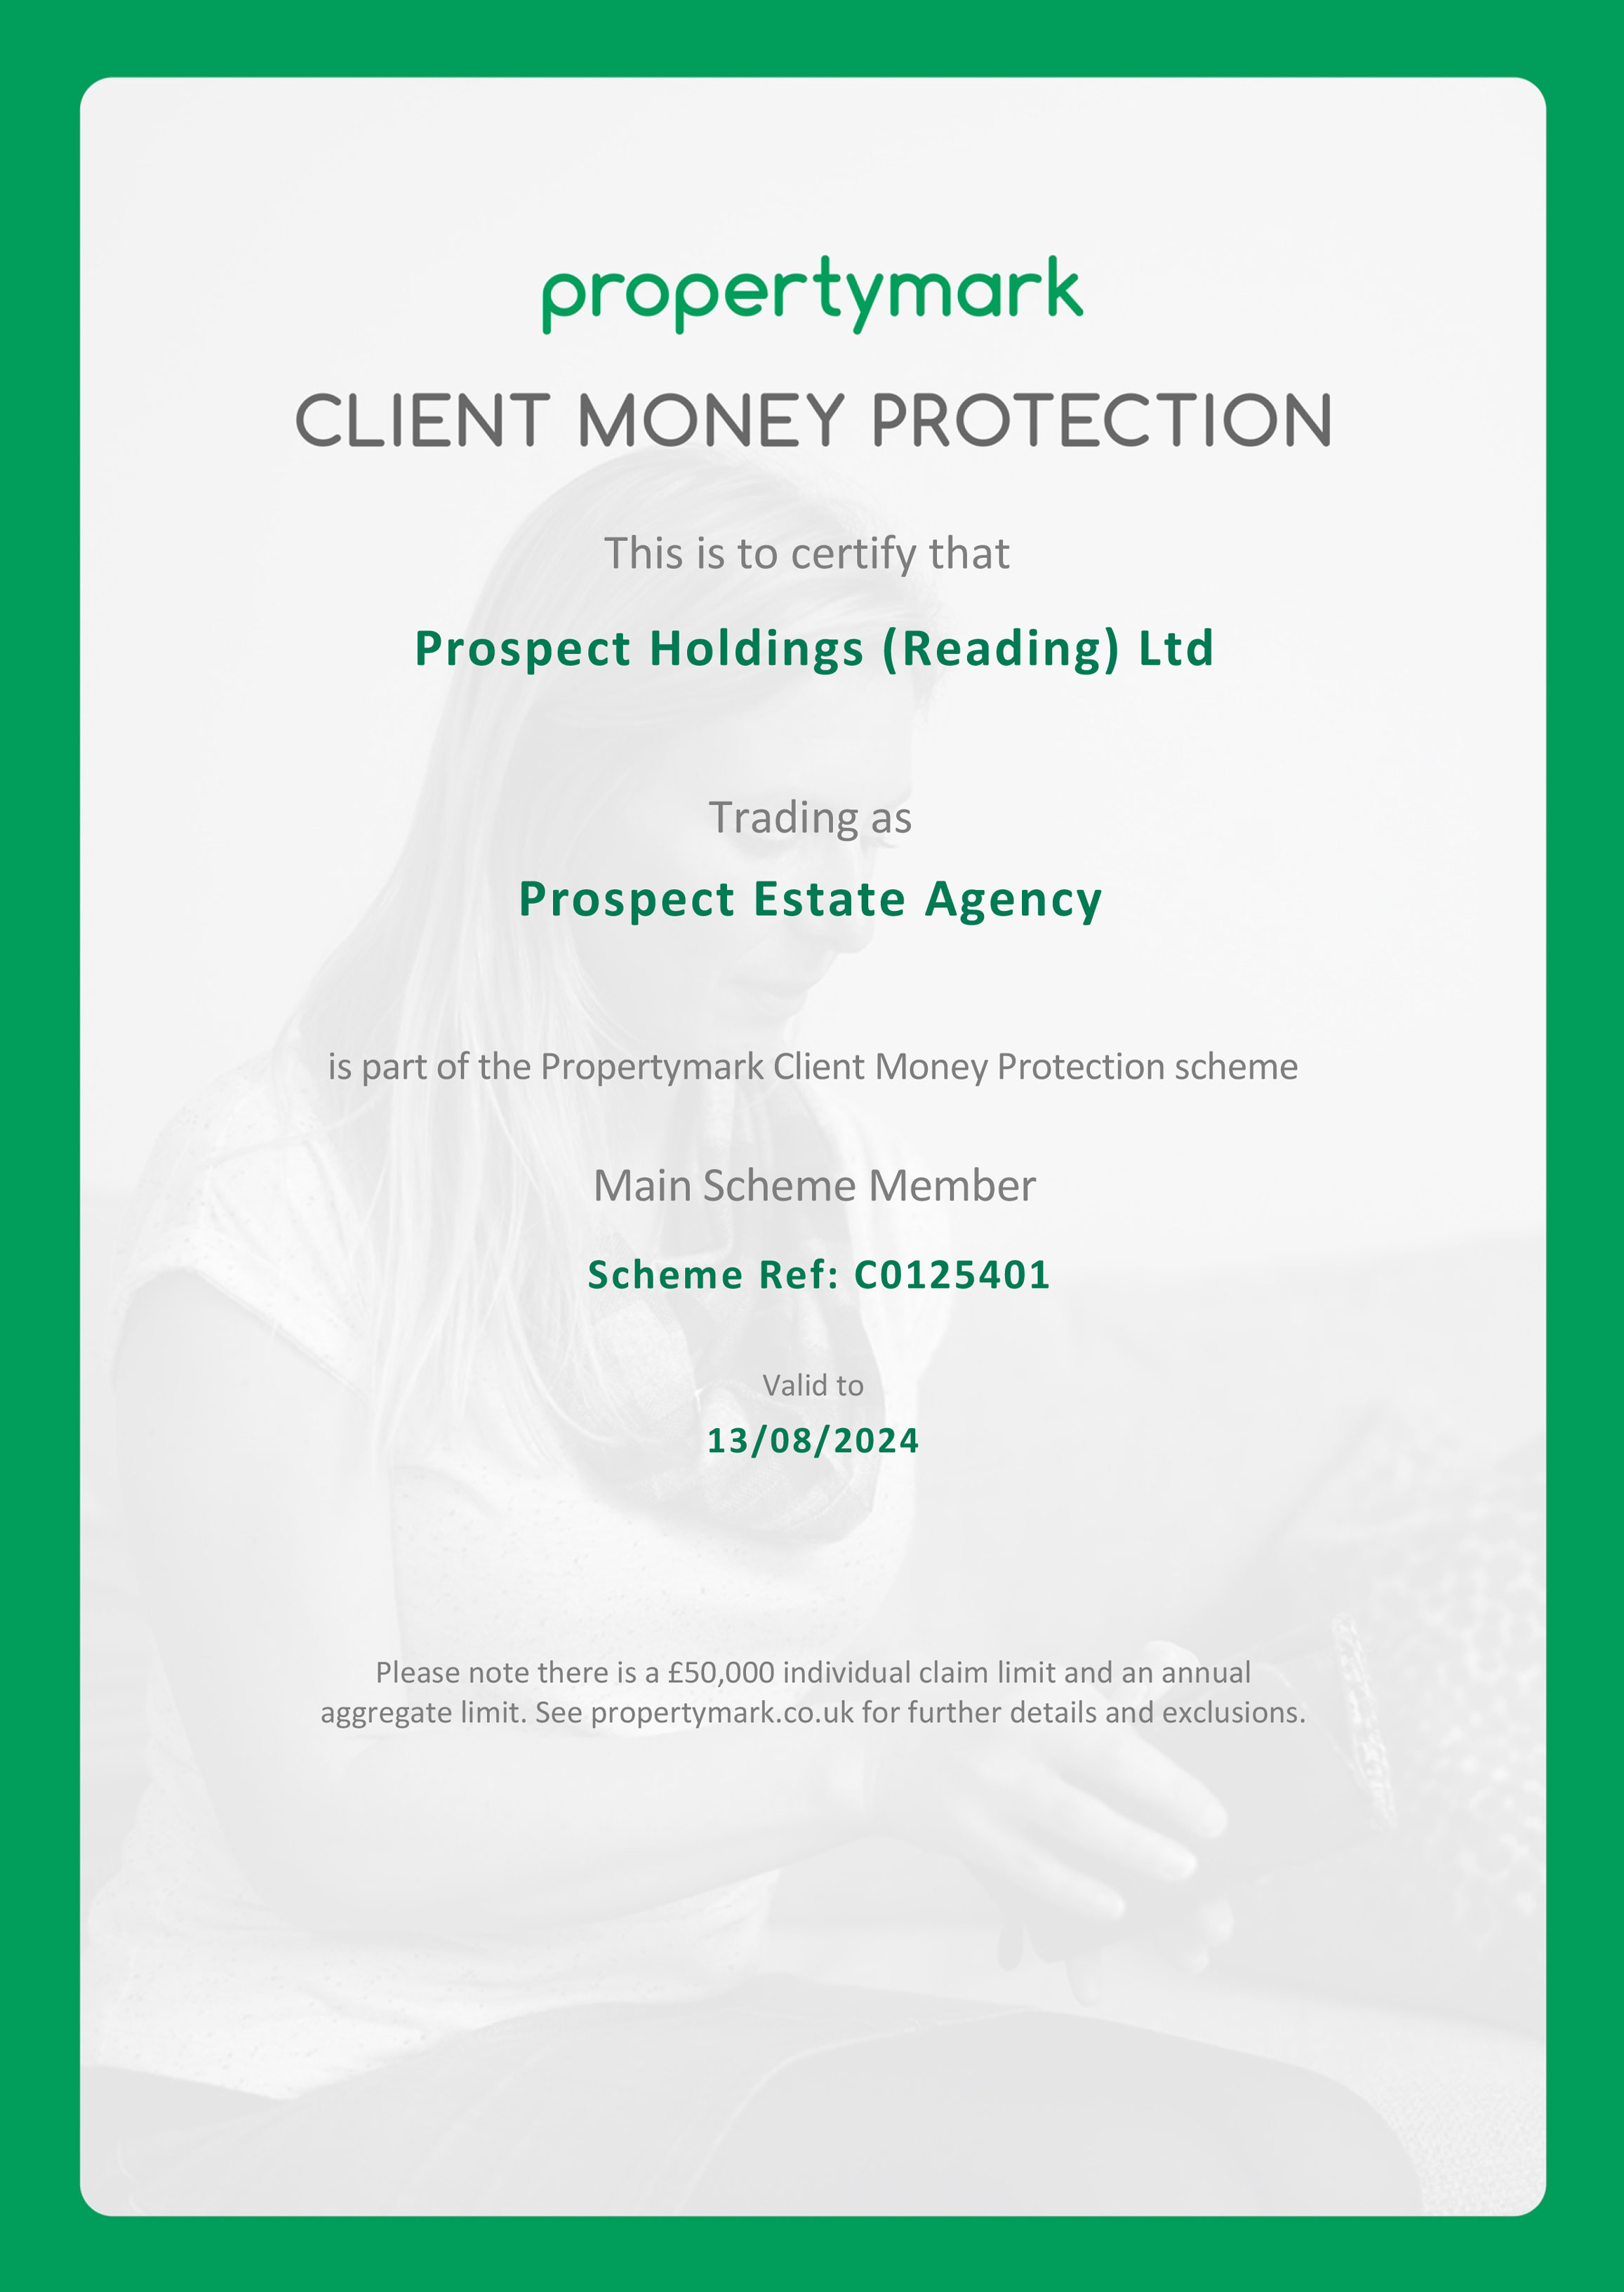 Prospect Estate Agency's Client Money Protection certificate